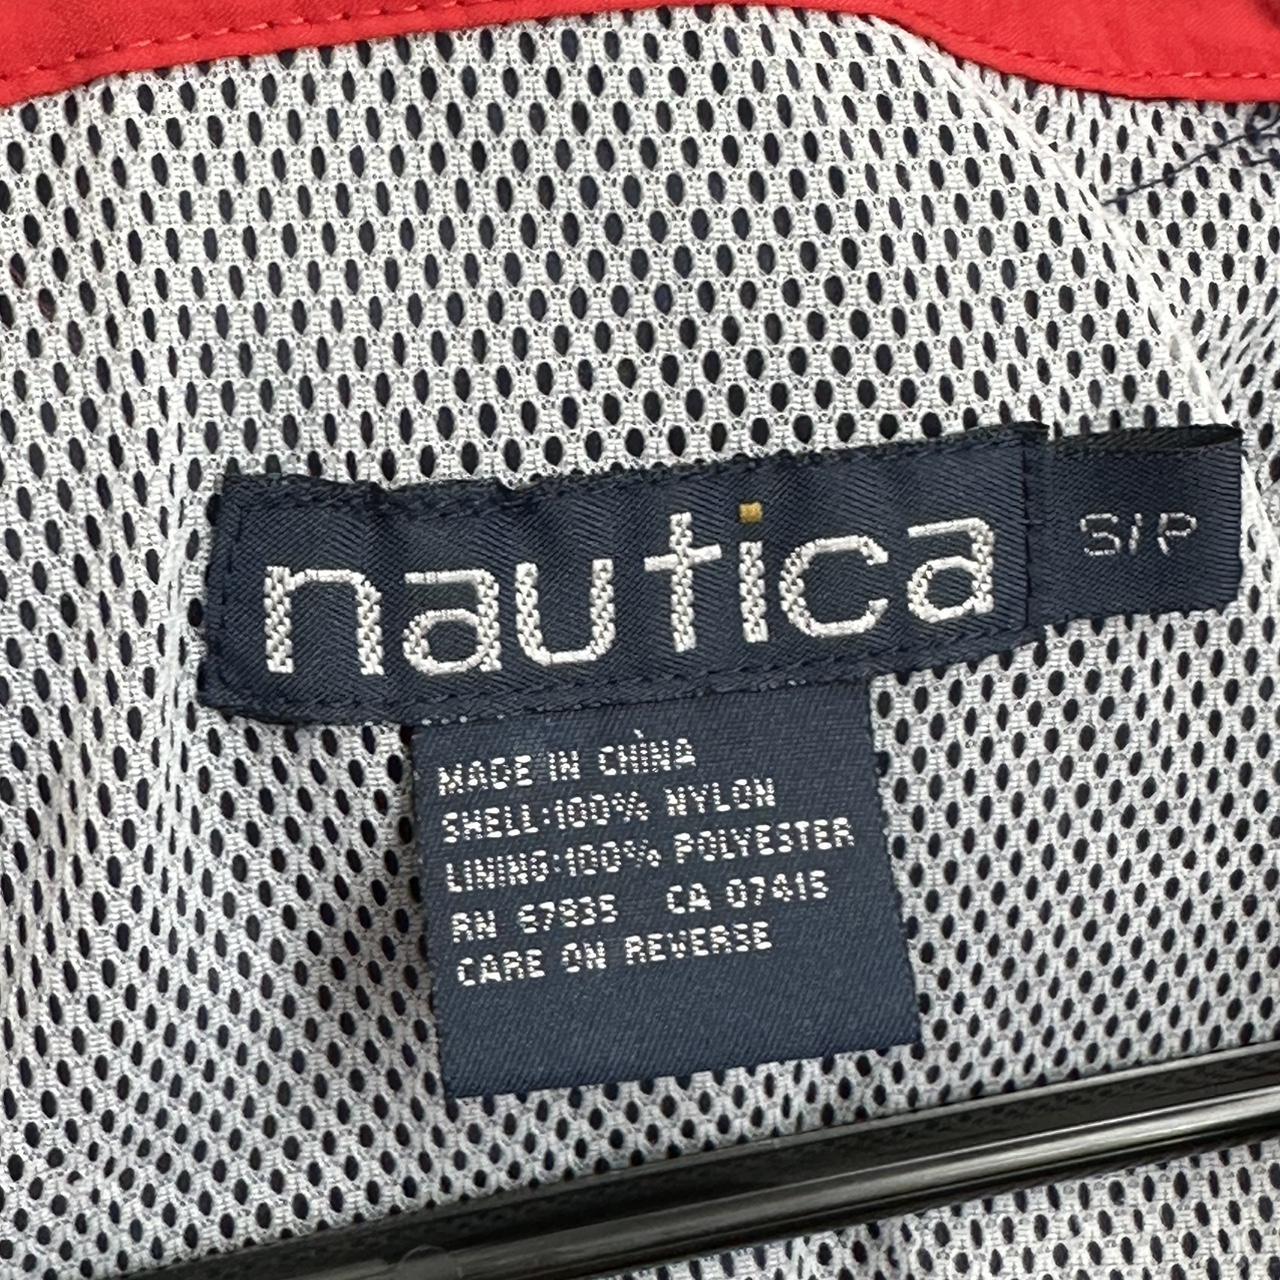 Nautica Men's Navy and Red Jacket (4)